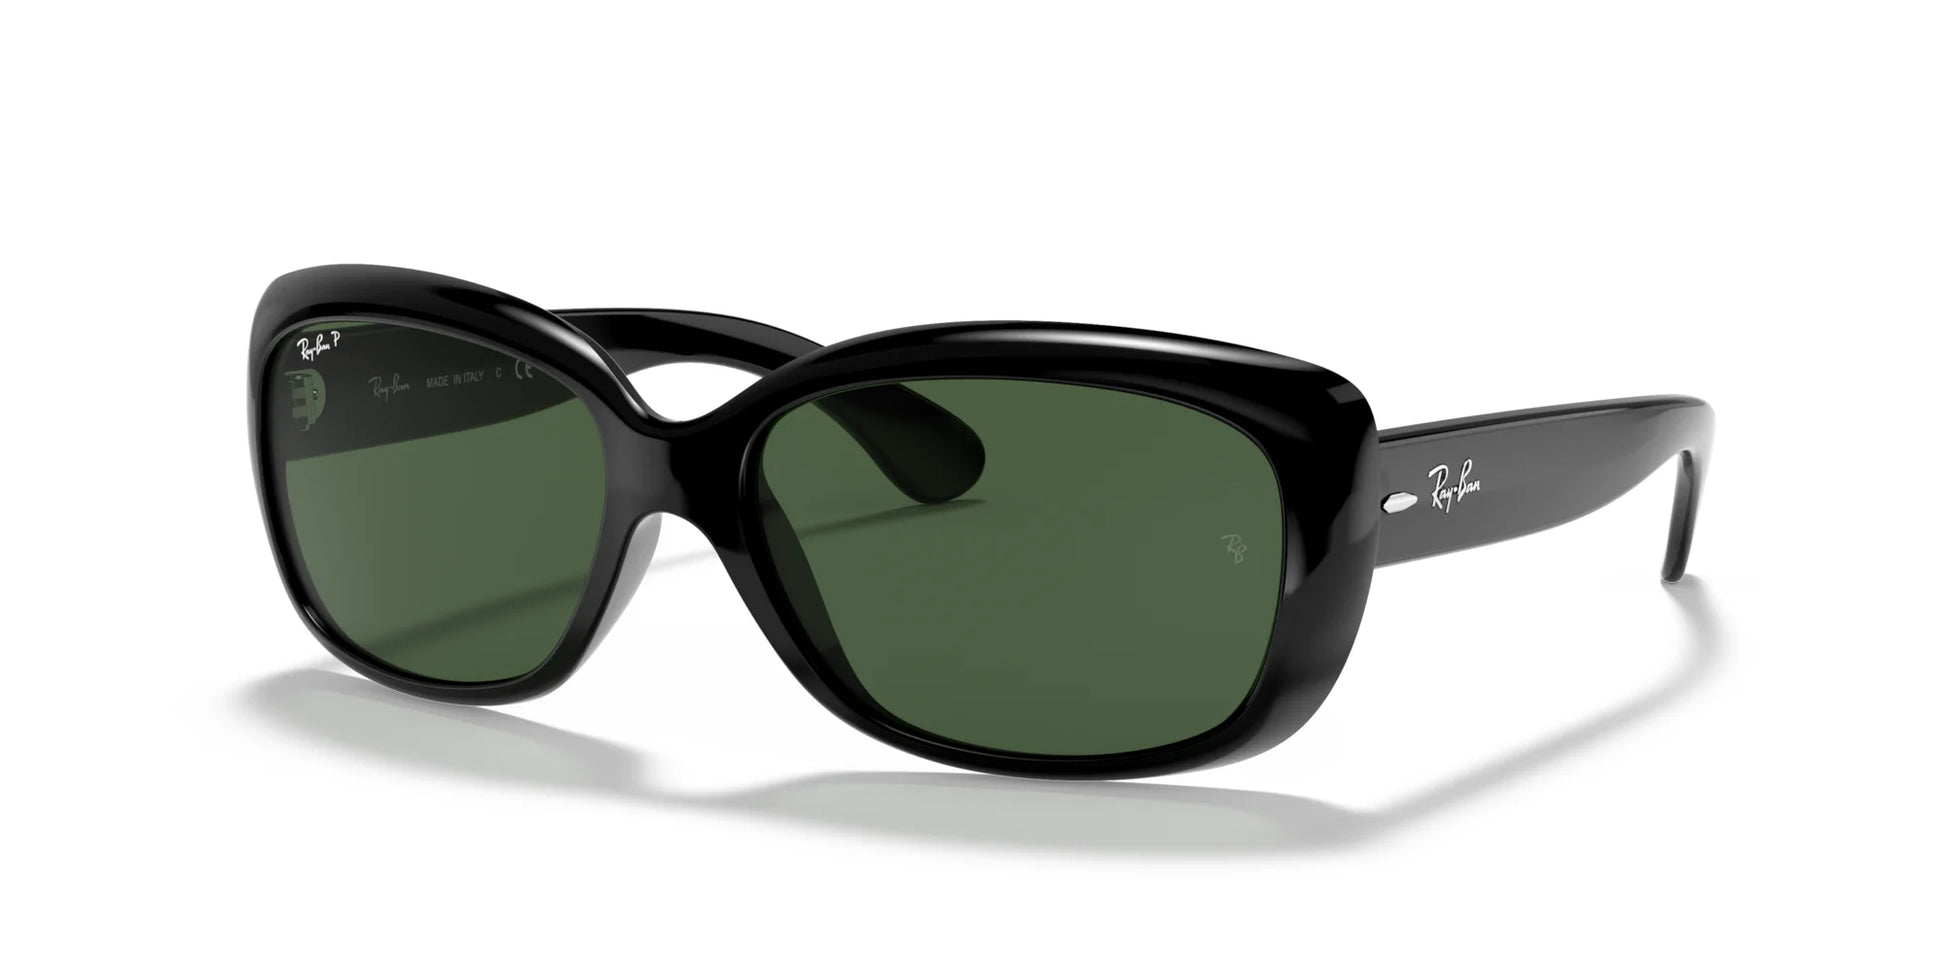 Ray-Ban JACKIE OHH RB4101 Sunglasses Black / Green